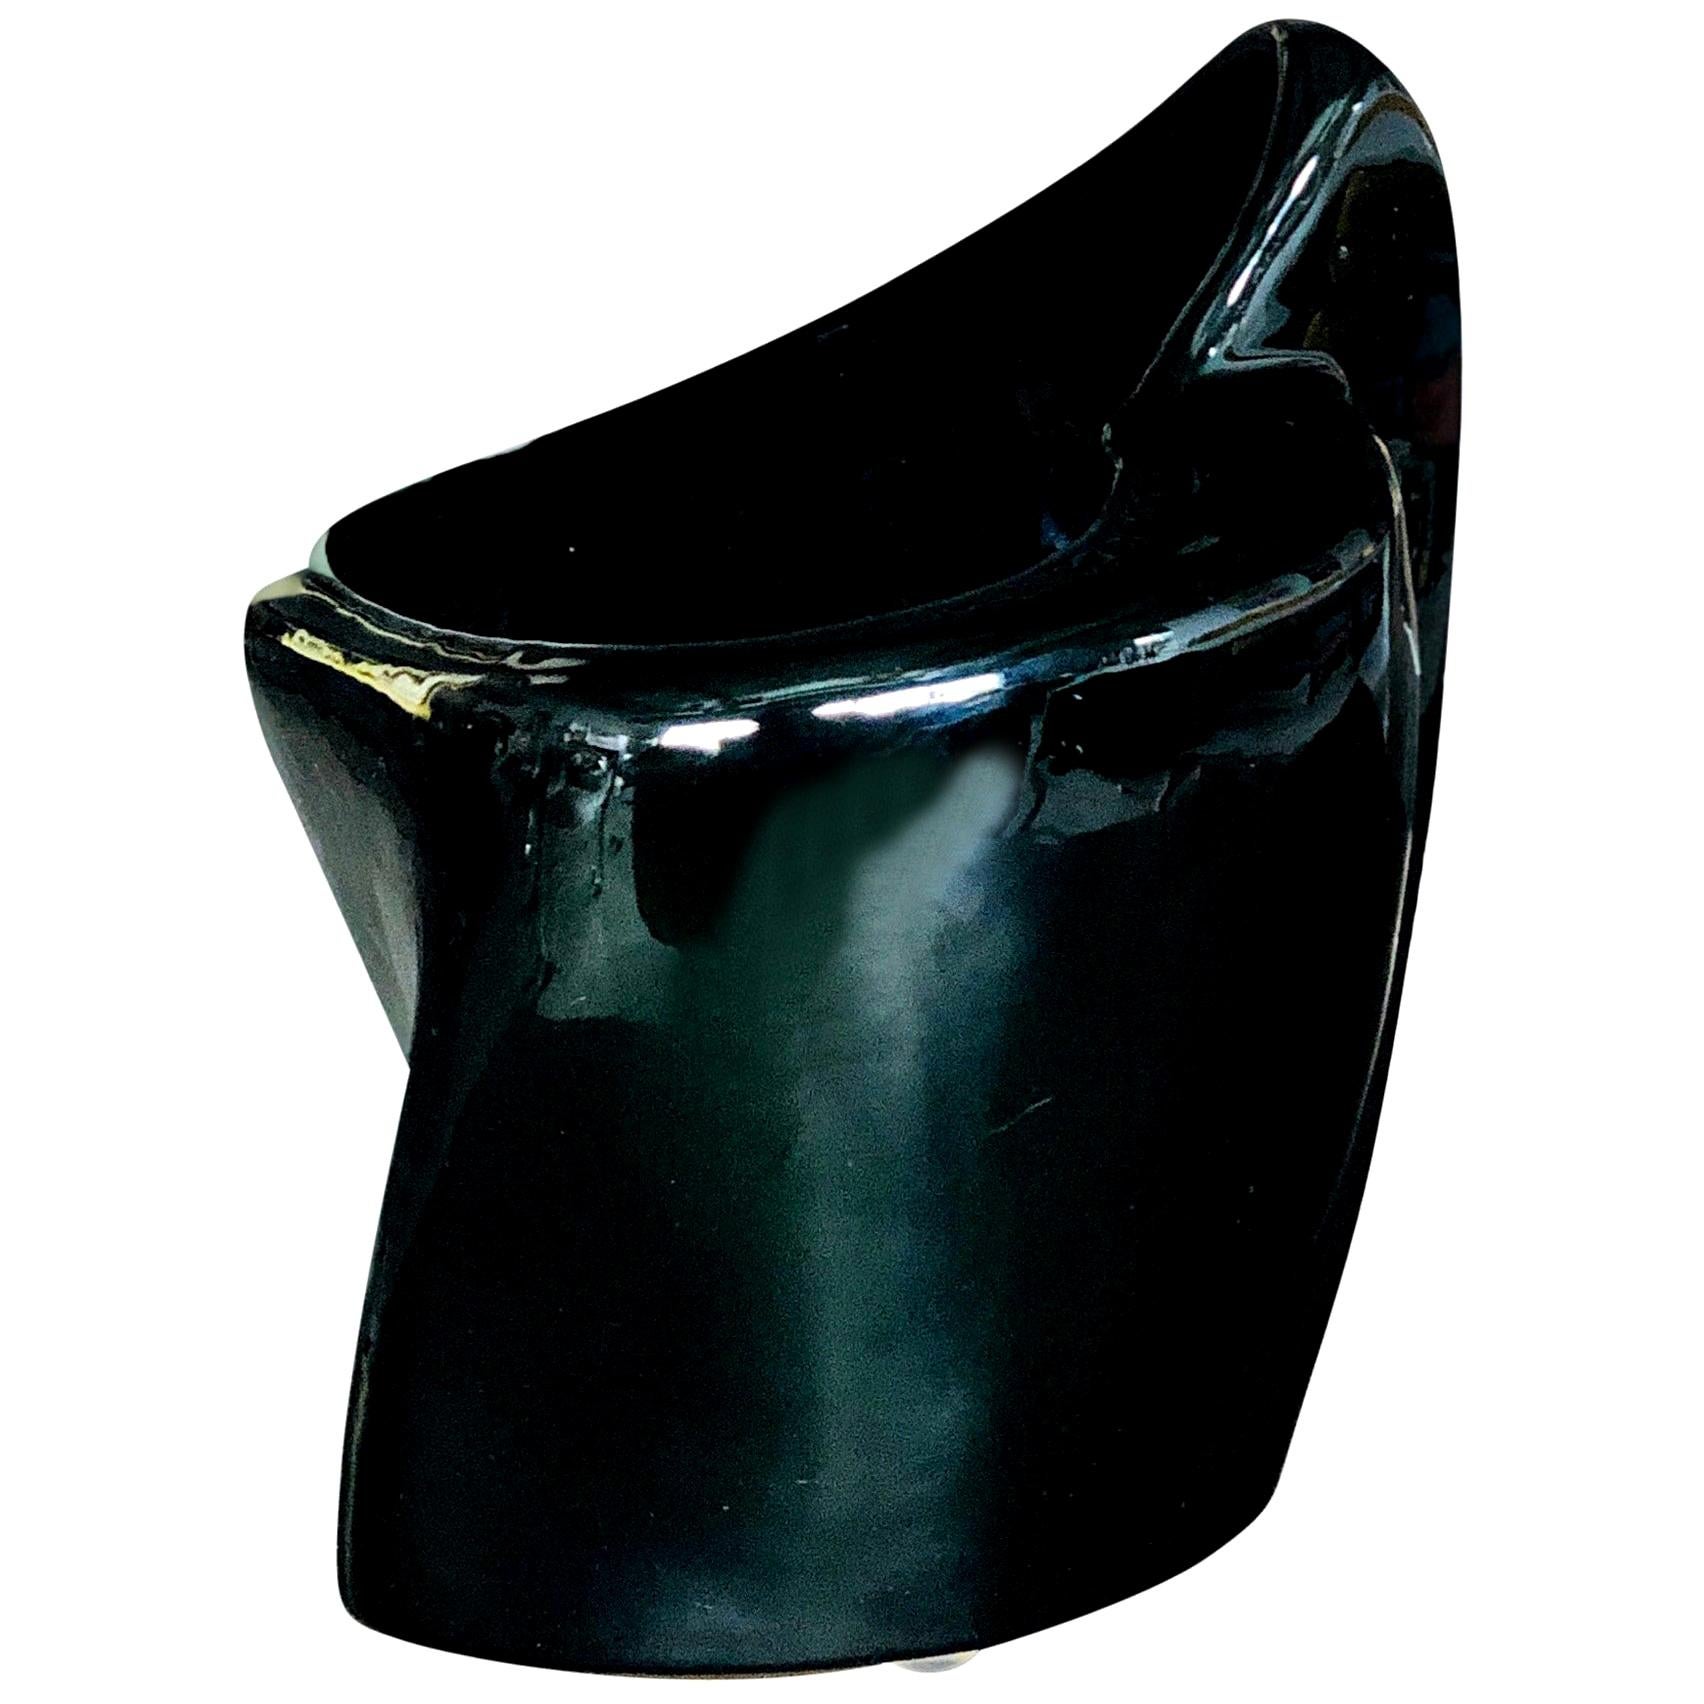 Black Glazed Pottery Organically Shaped Vase or Vessel by Frankoma For Sale